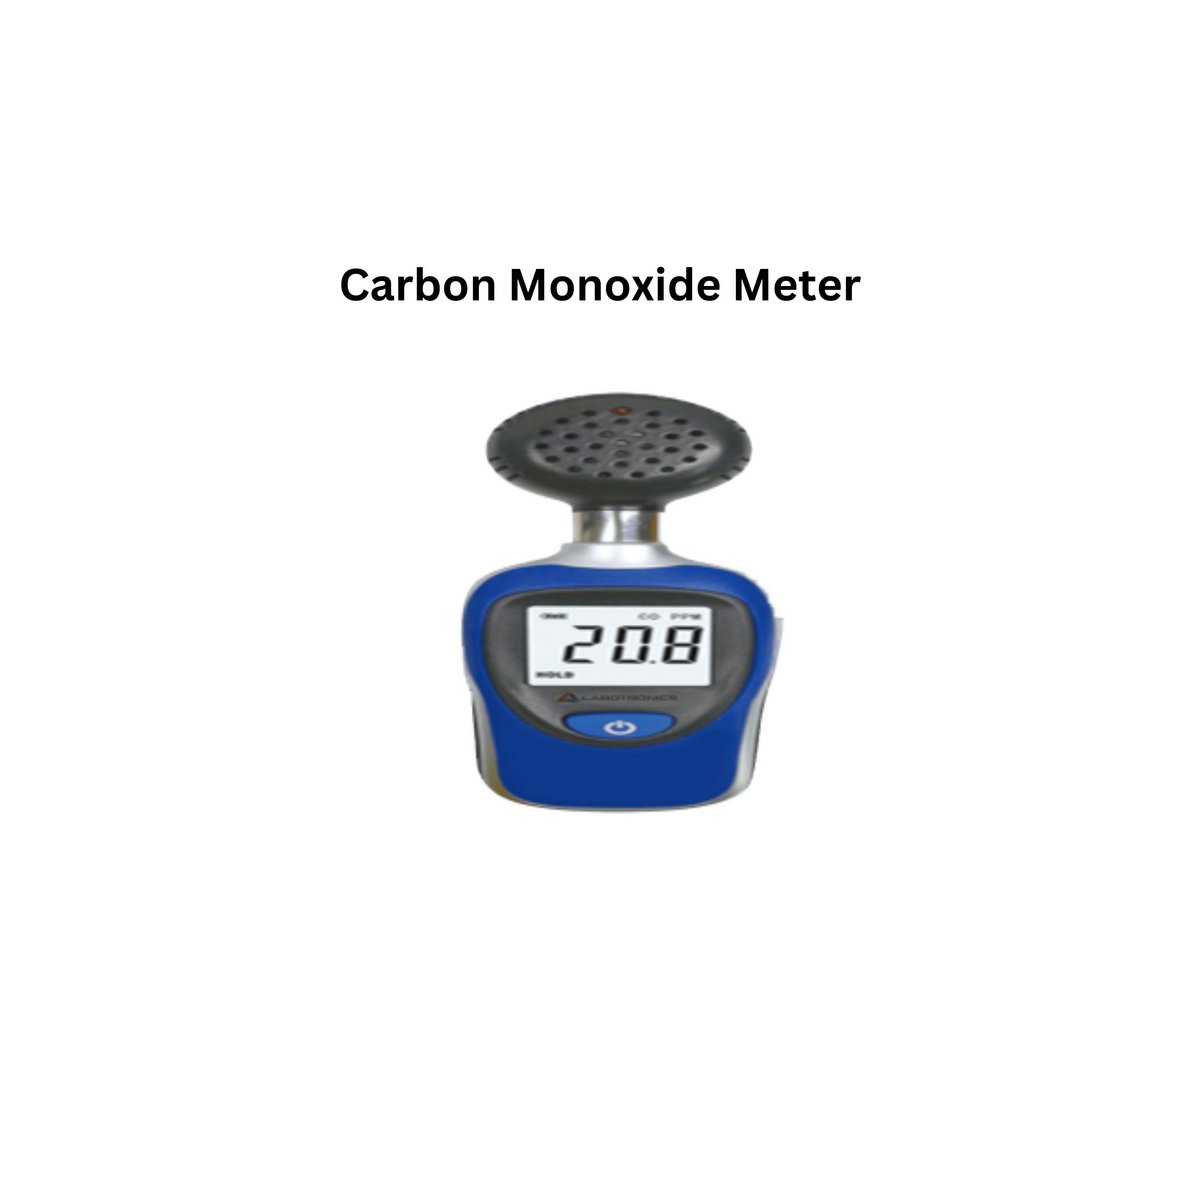 Carbon Monoxide Meter.jpg